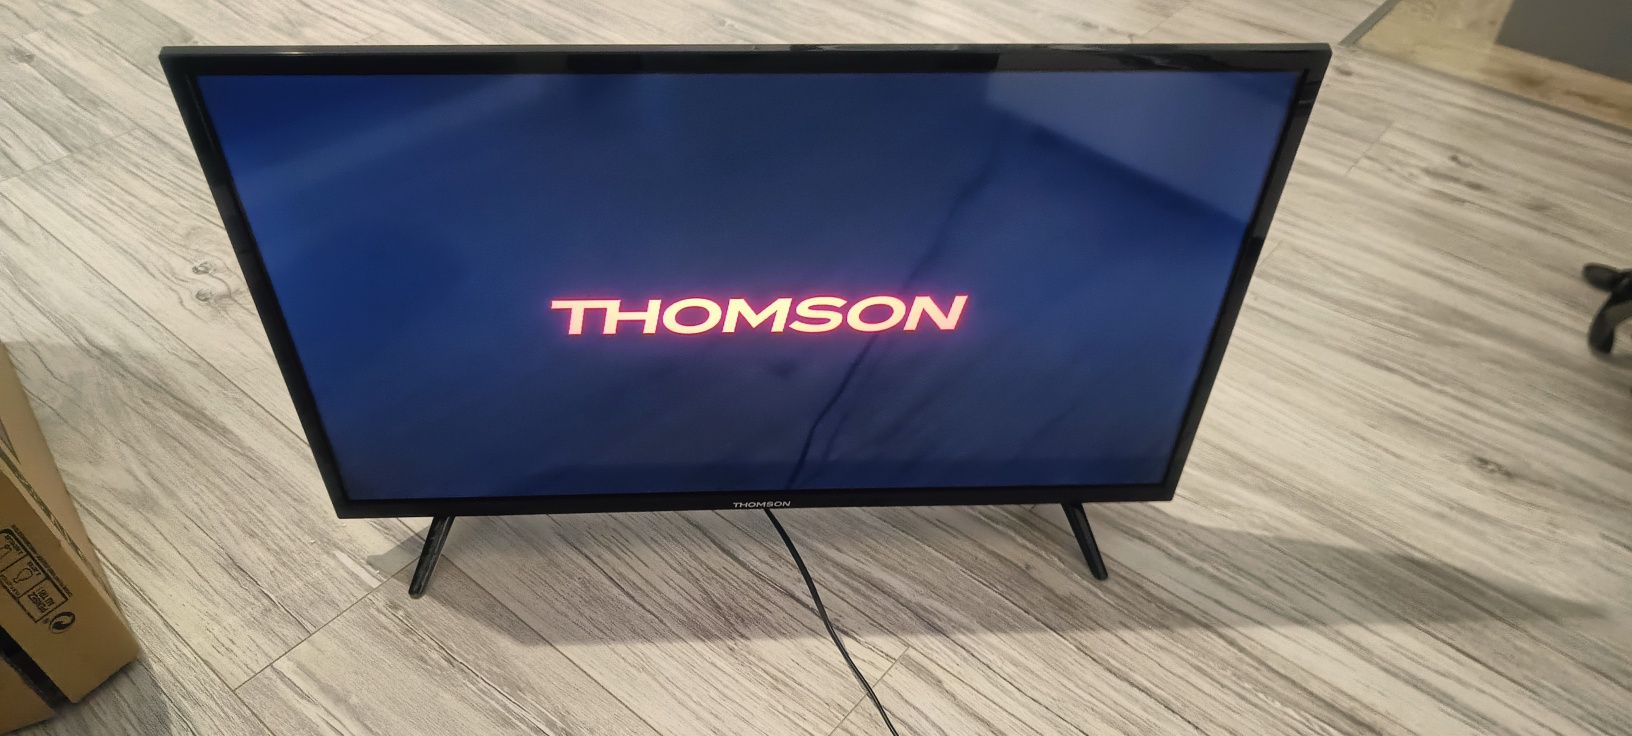 Telewizor Thomson 32 cale stan j. Nowy